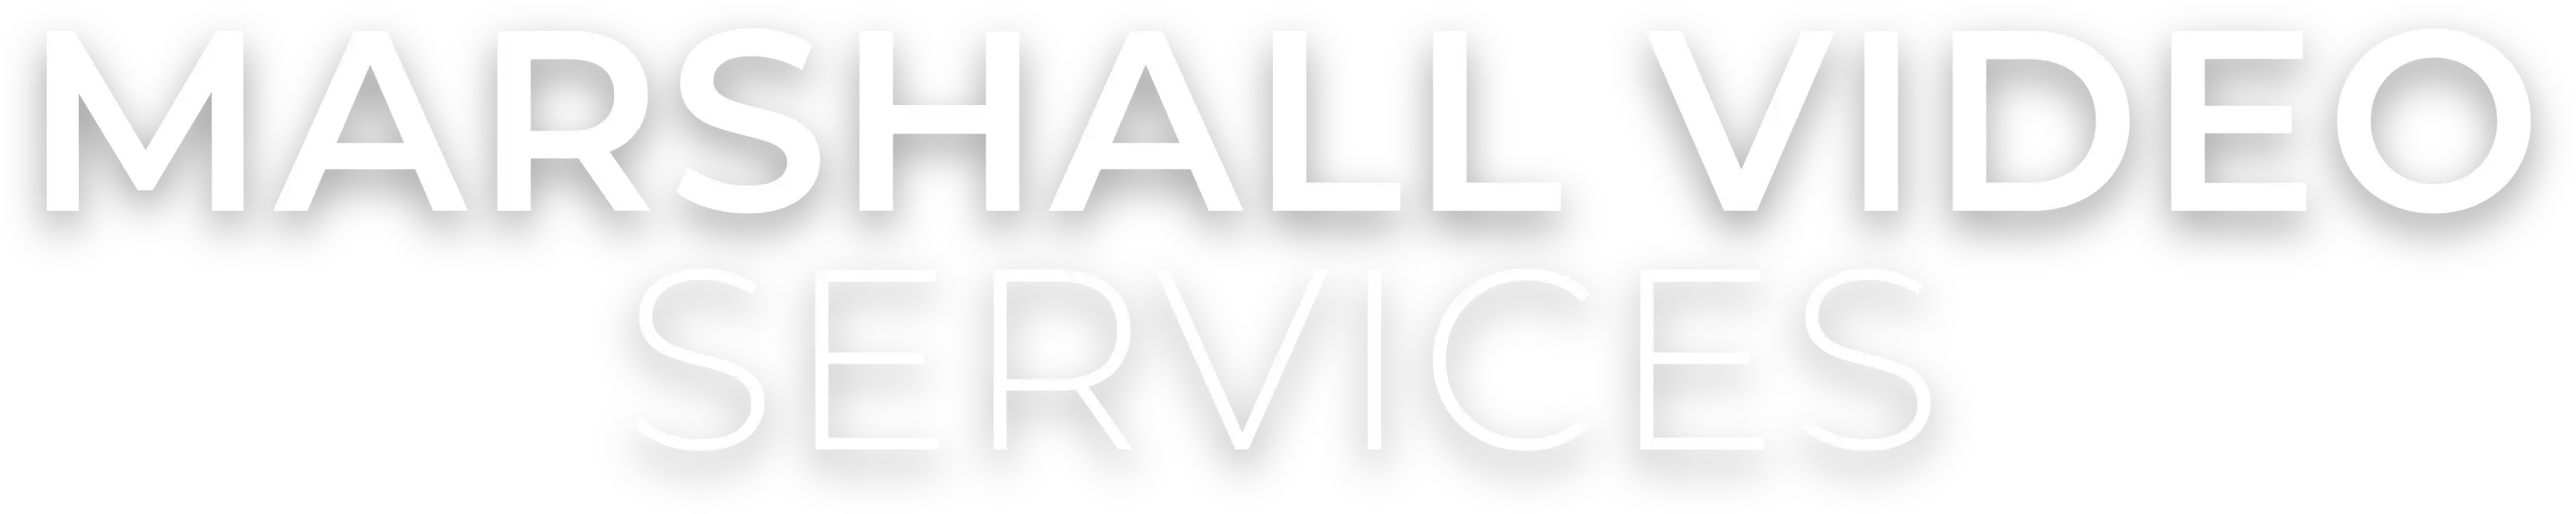 Marshall Video Services Logo